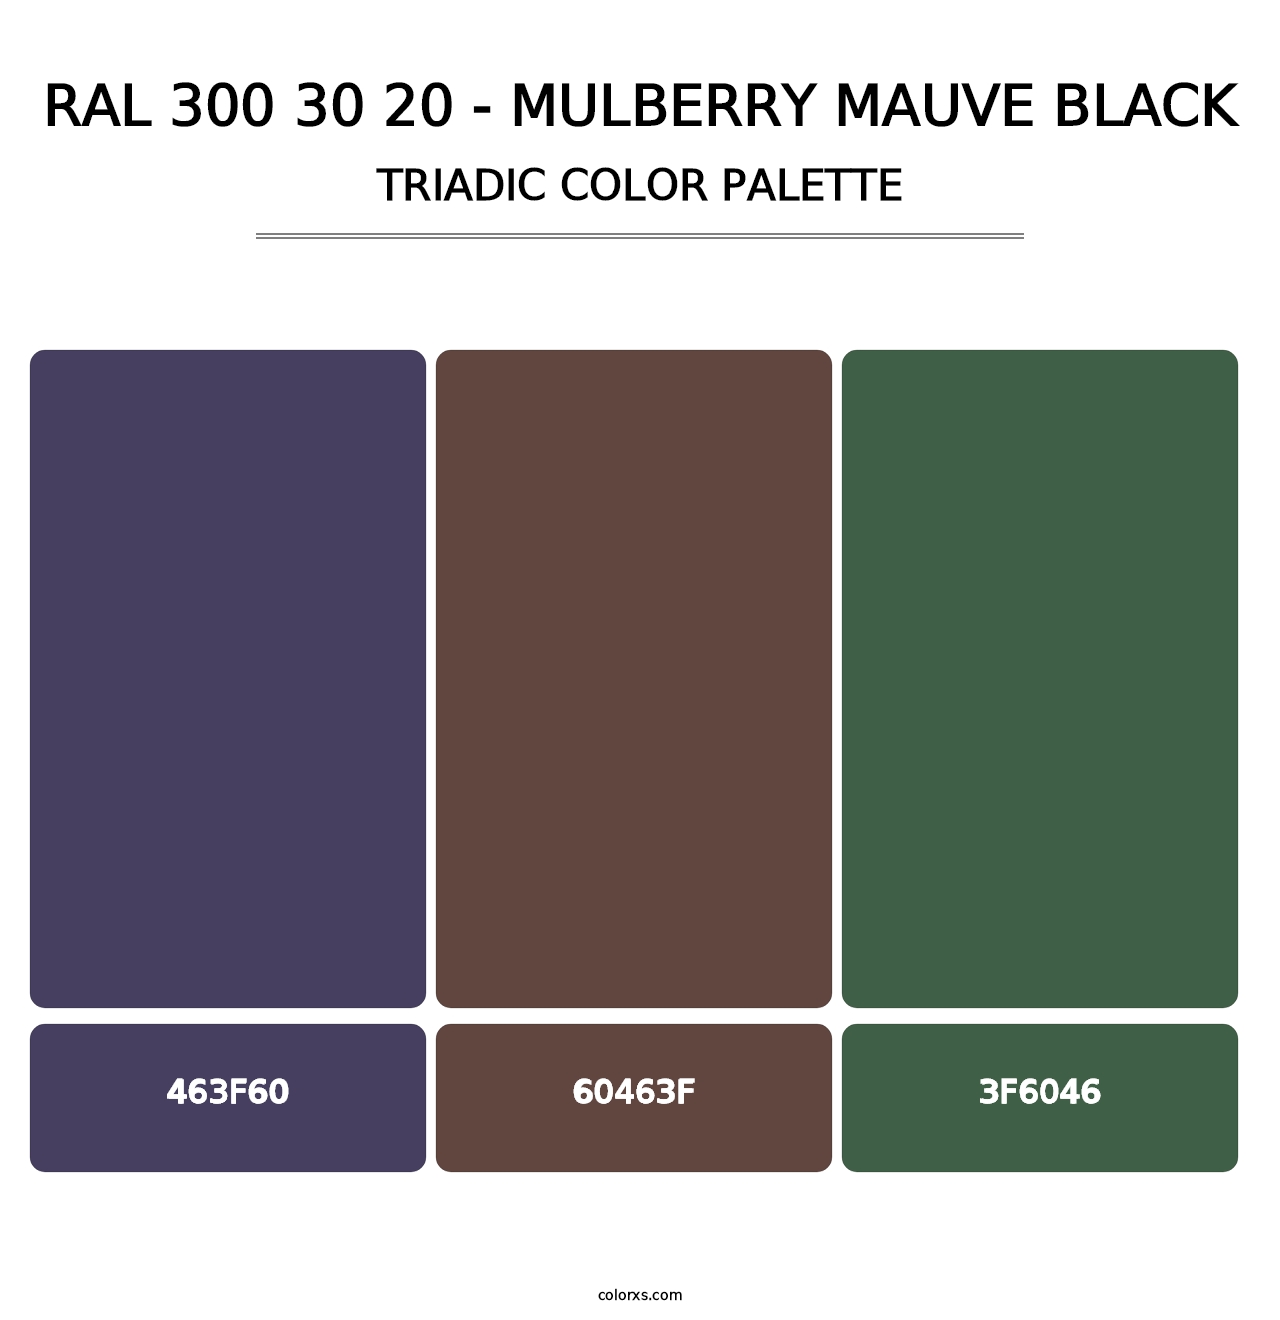 RAL 300 30 20 - Mulberry Mauve Black - Triadic Color Palette